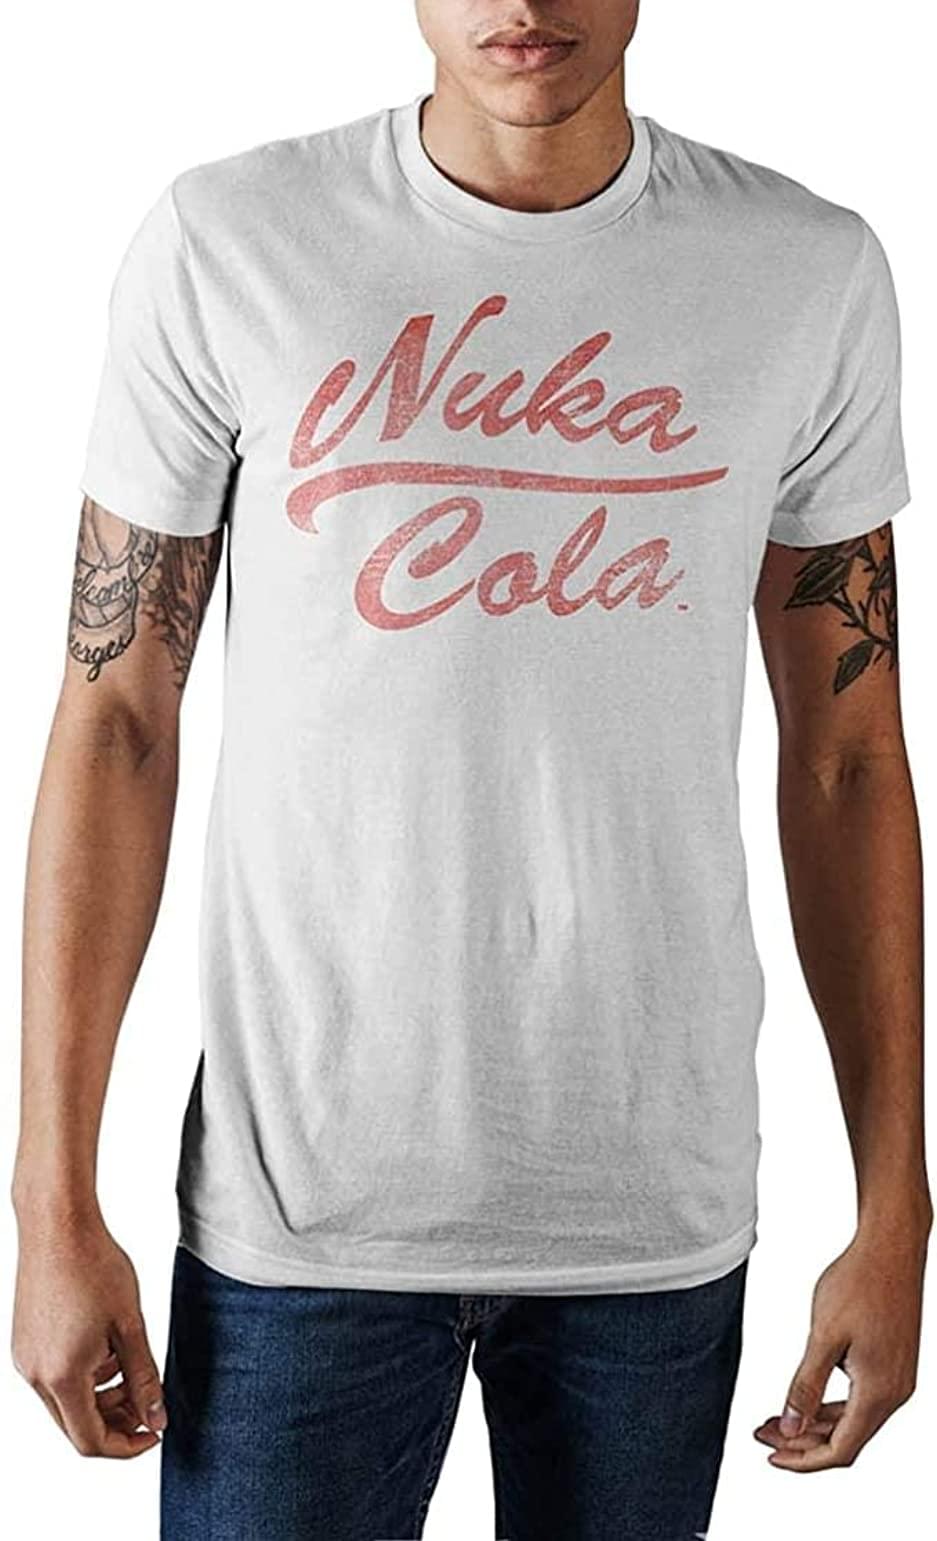 Fallout "Nuka Cola" Men's T-Shirt